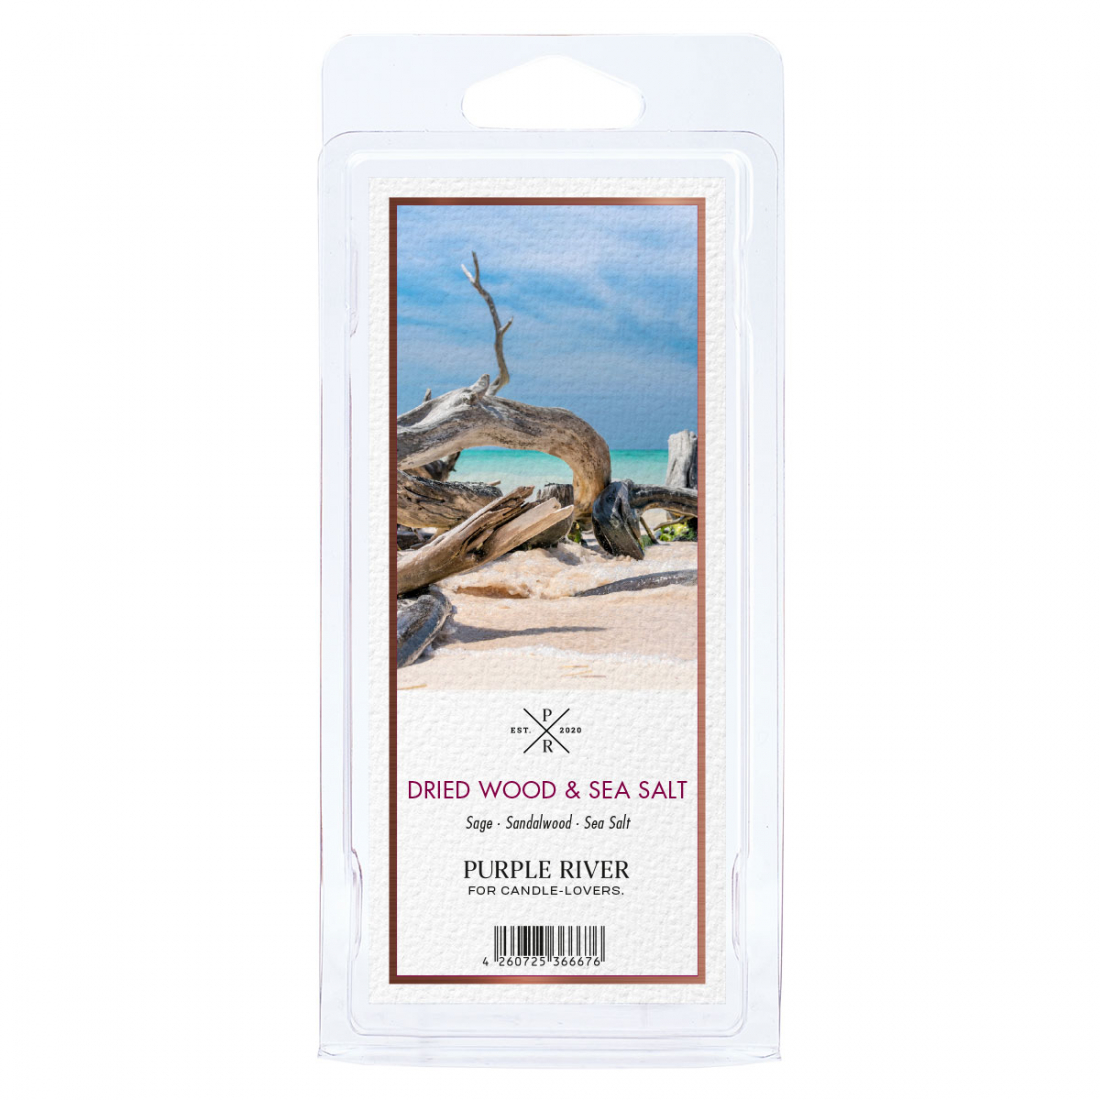 'Dried Wood & Sea Salt' Scented Wax - 50 g